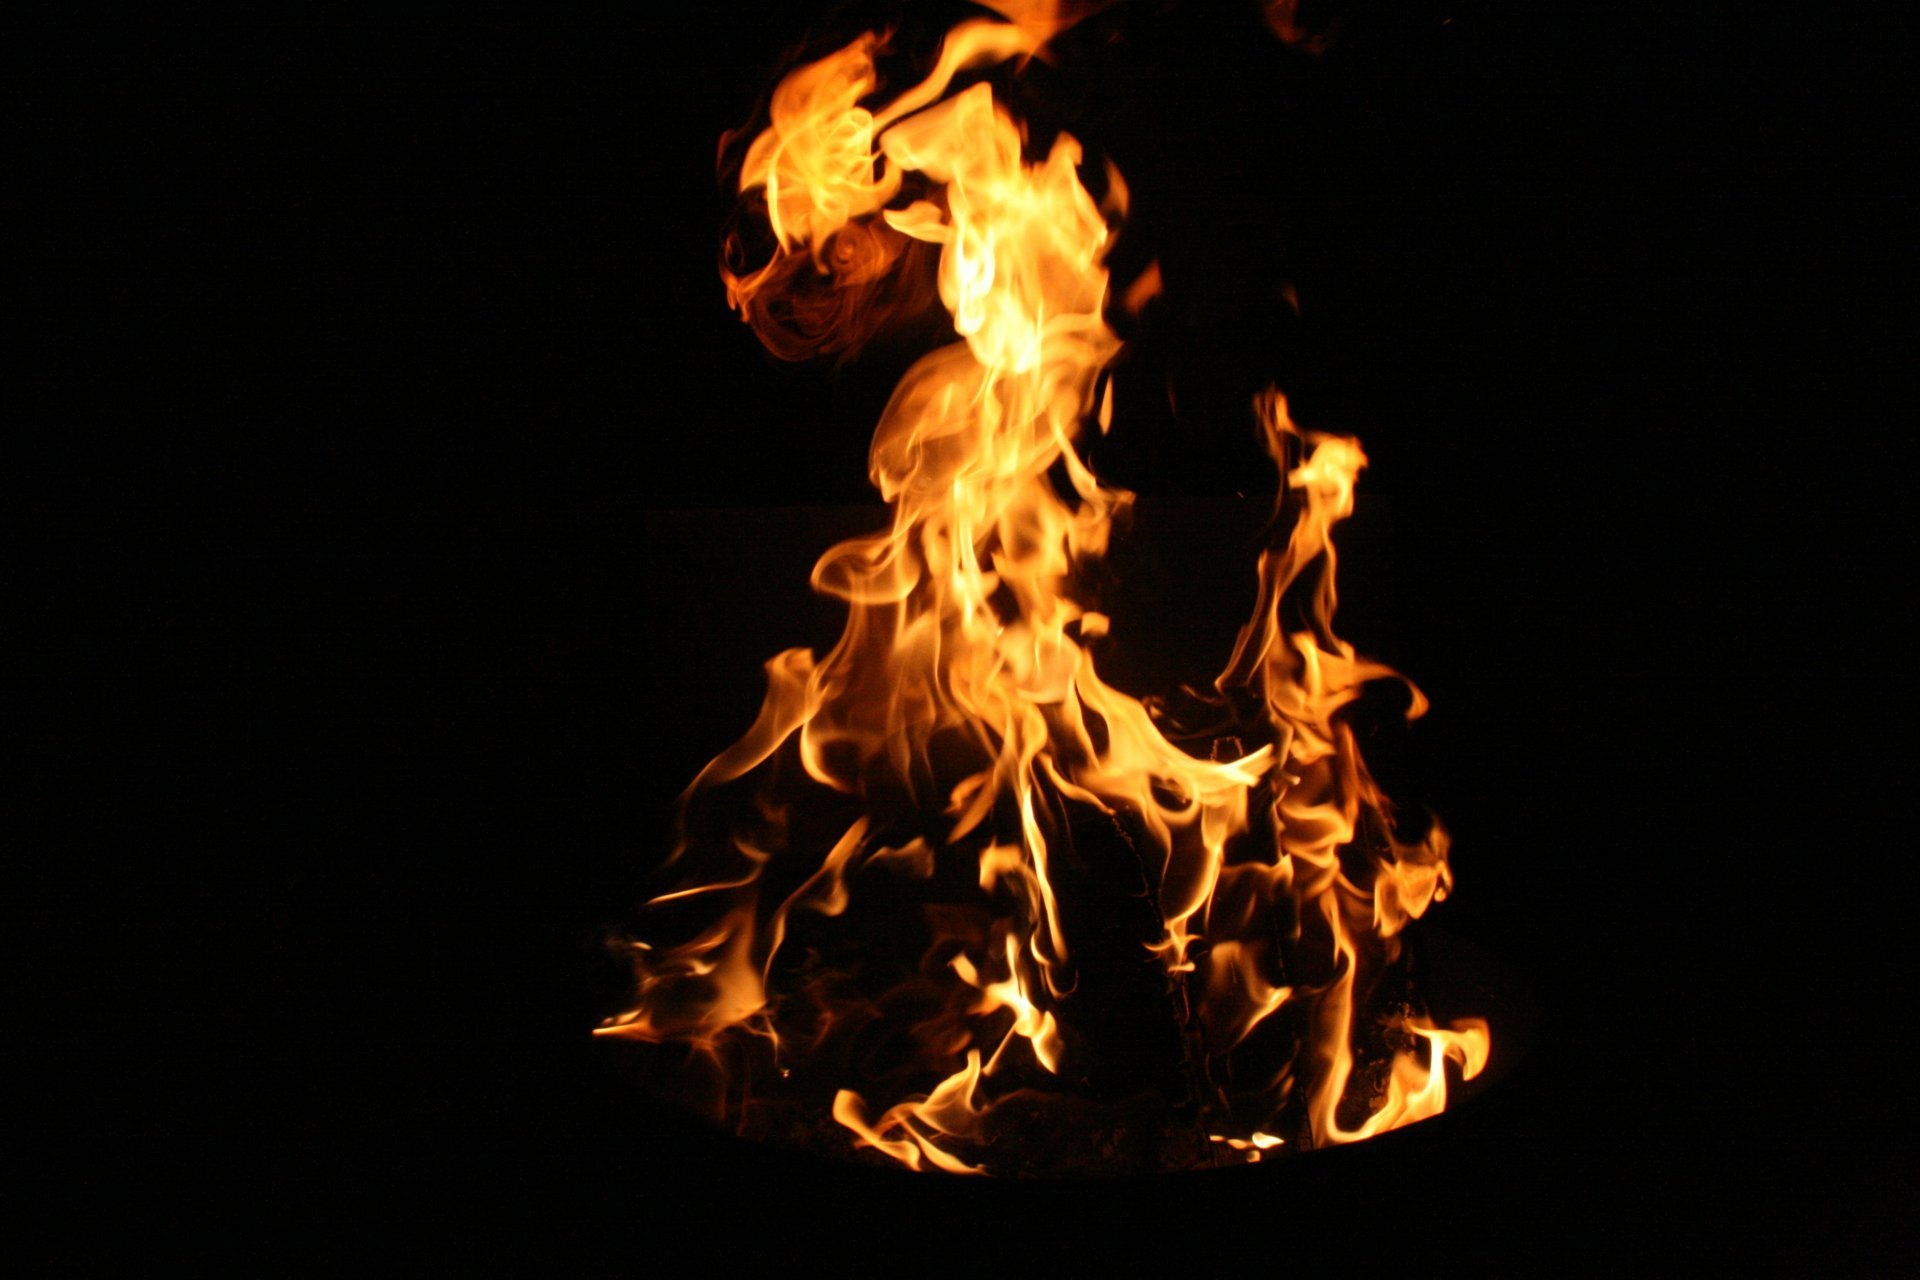 flame wallpaper hd,fire,flame,heat,bonfire,campfire